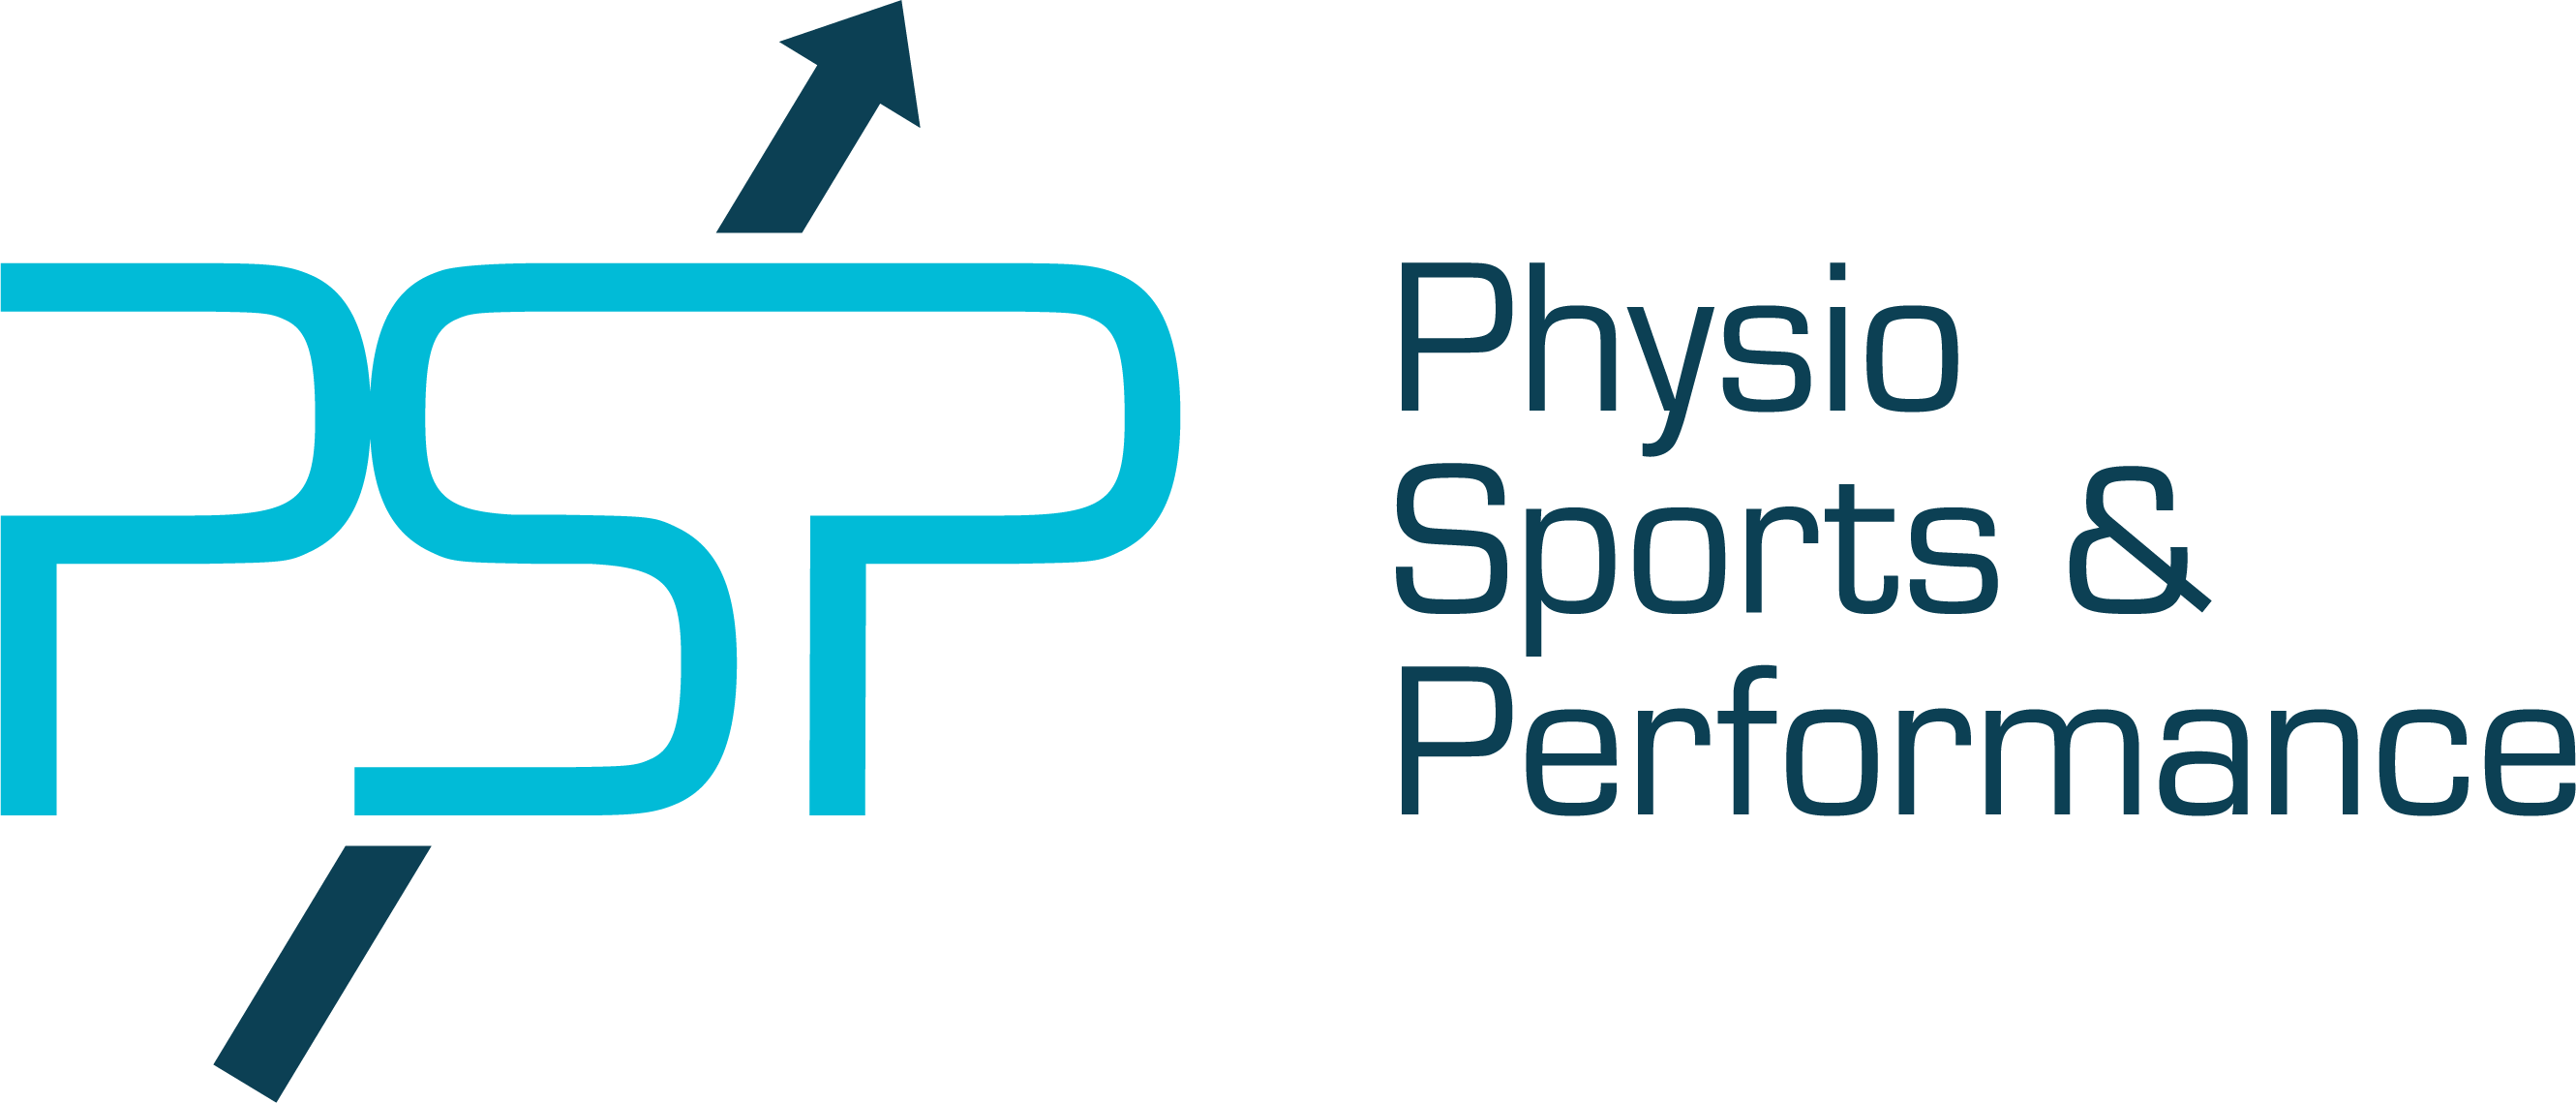 Physio Sports & Performance